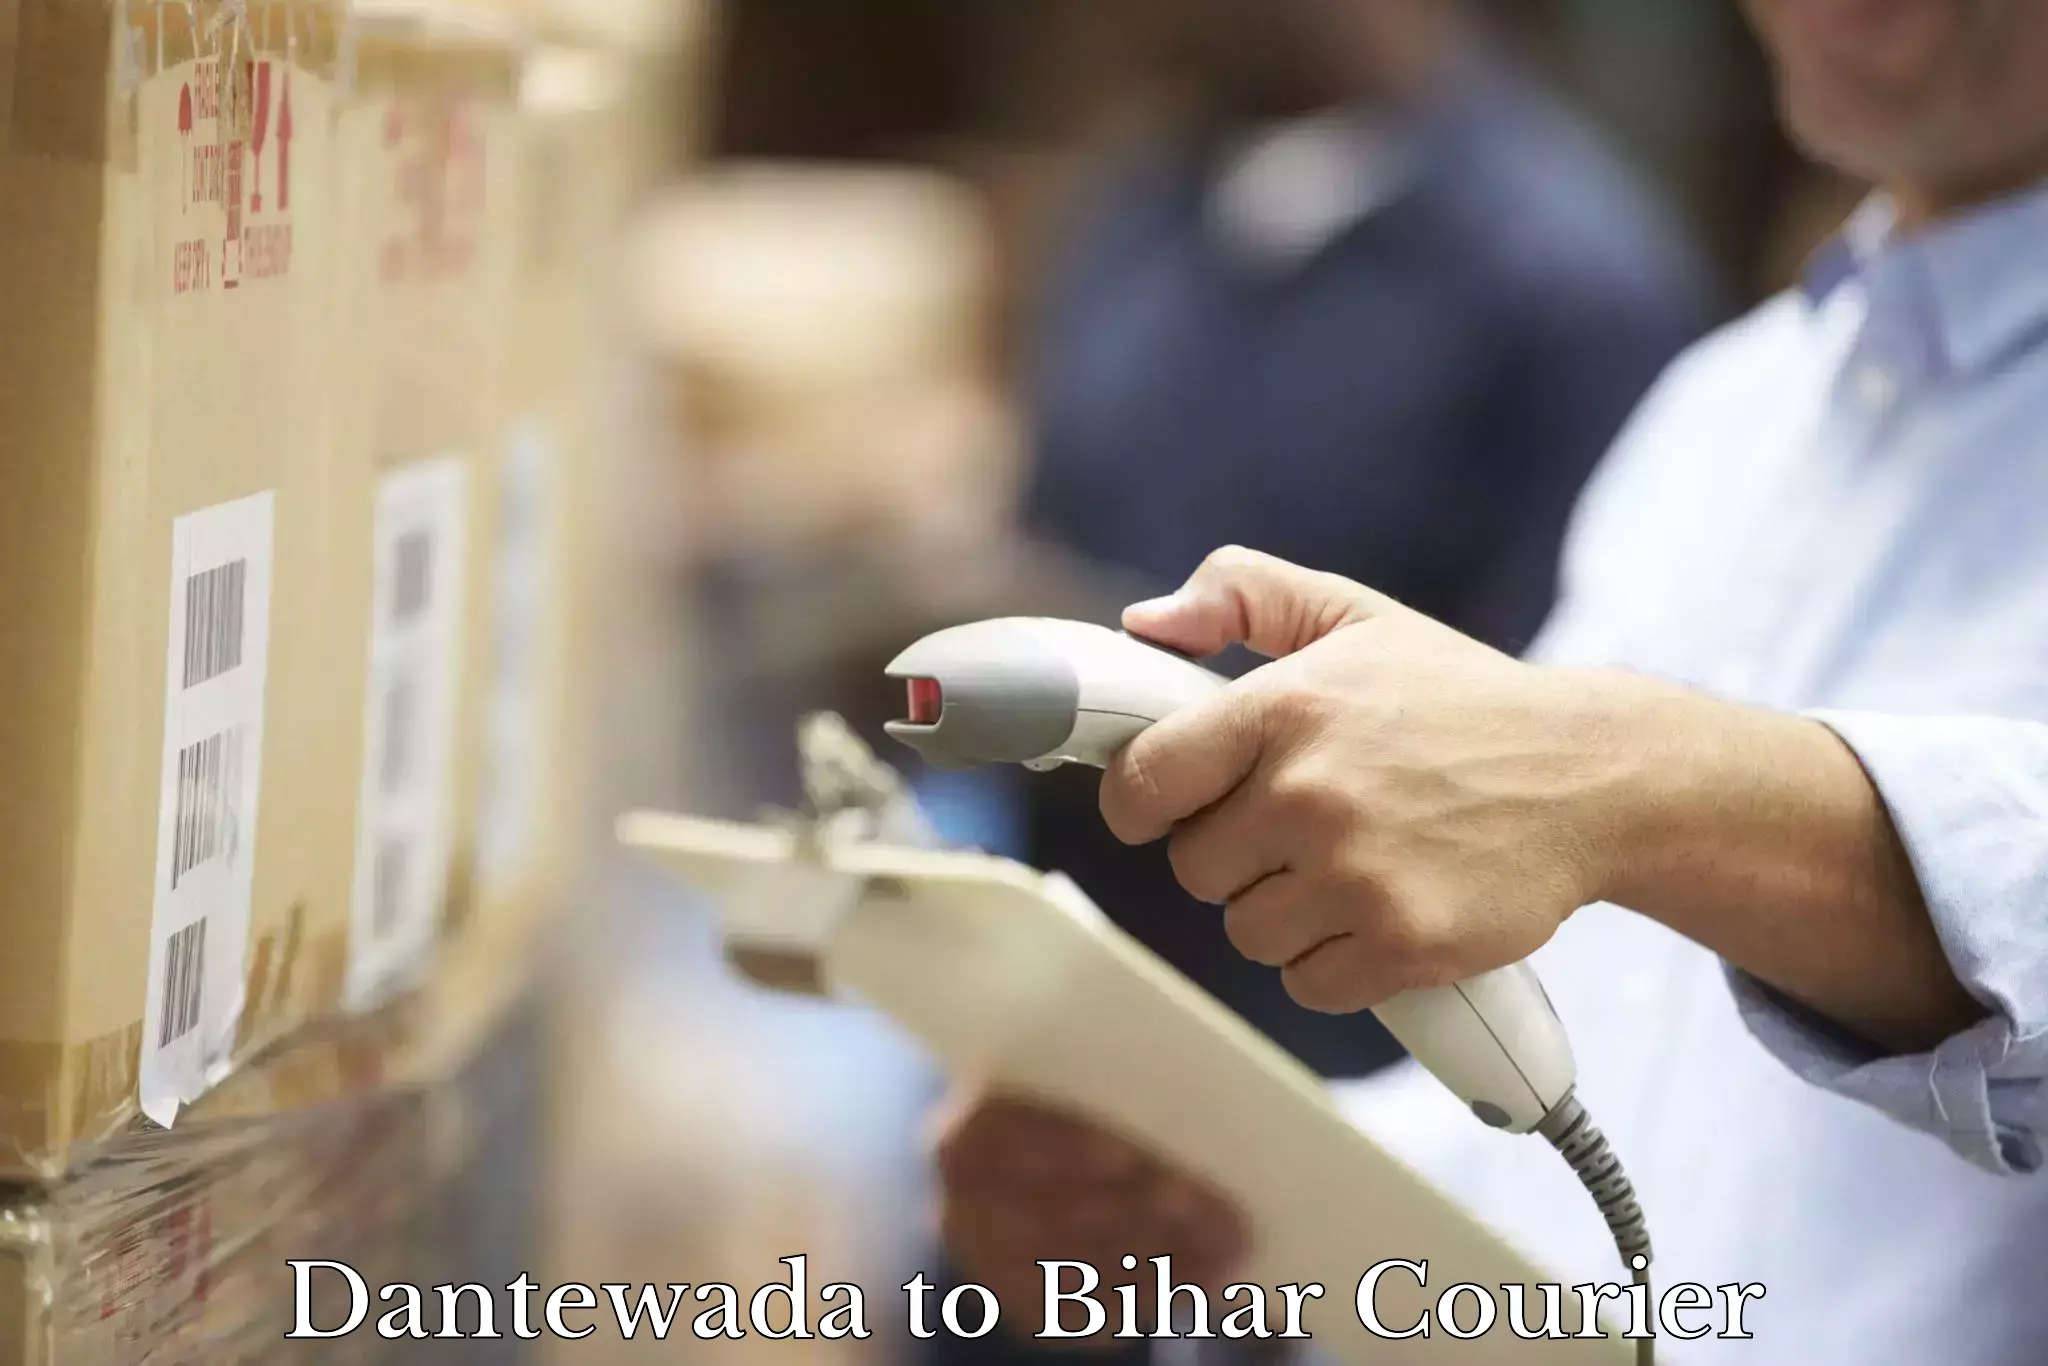 Quick dispatch service Dantewada to Madhubani